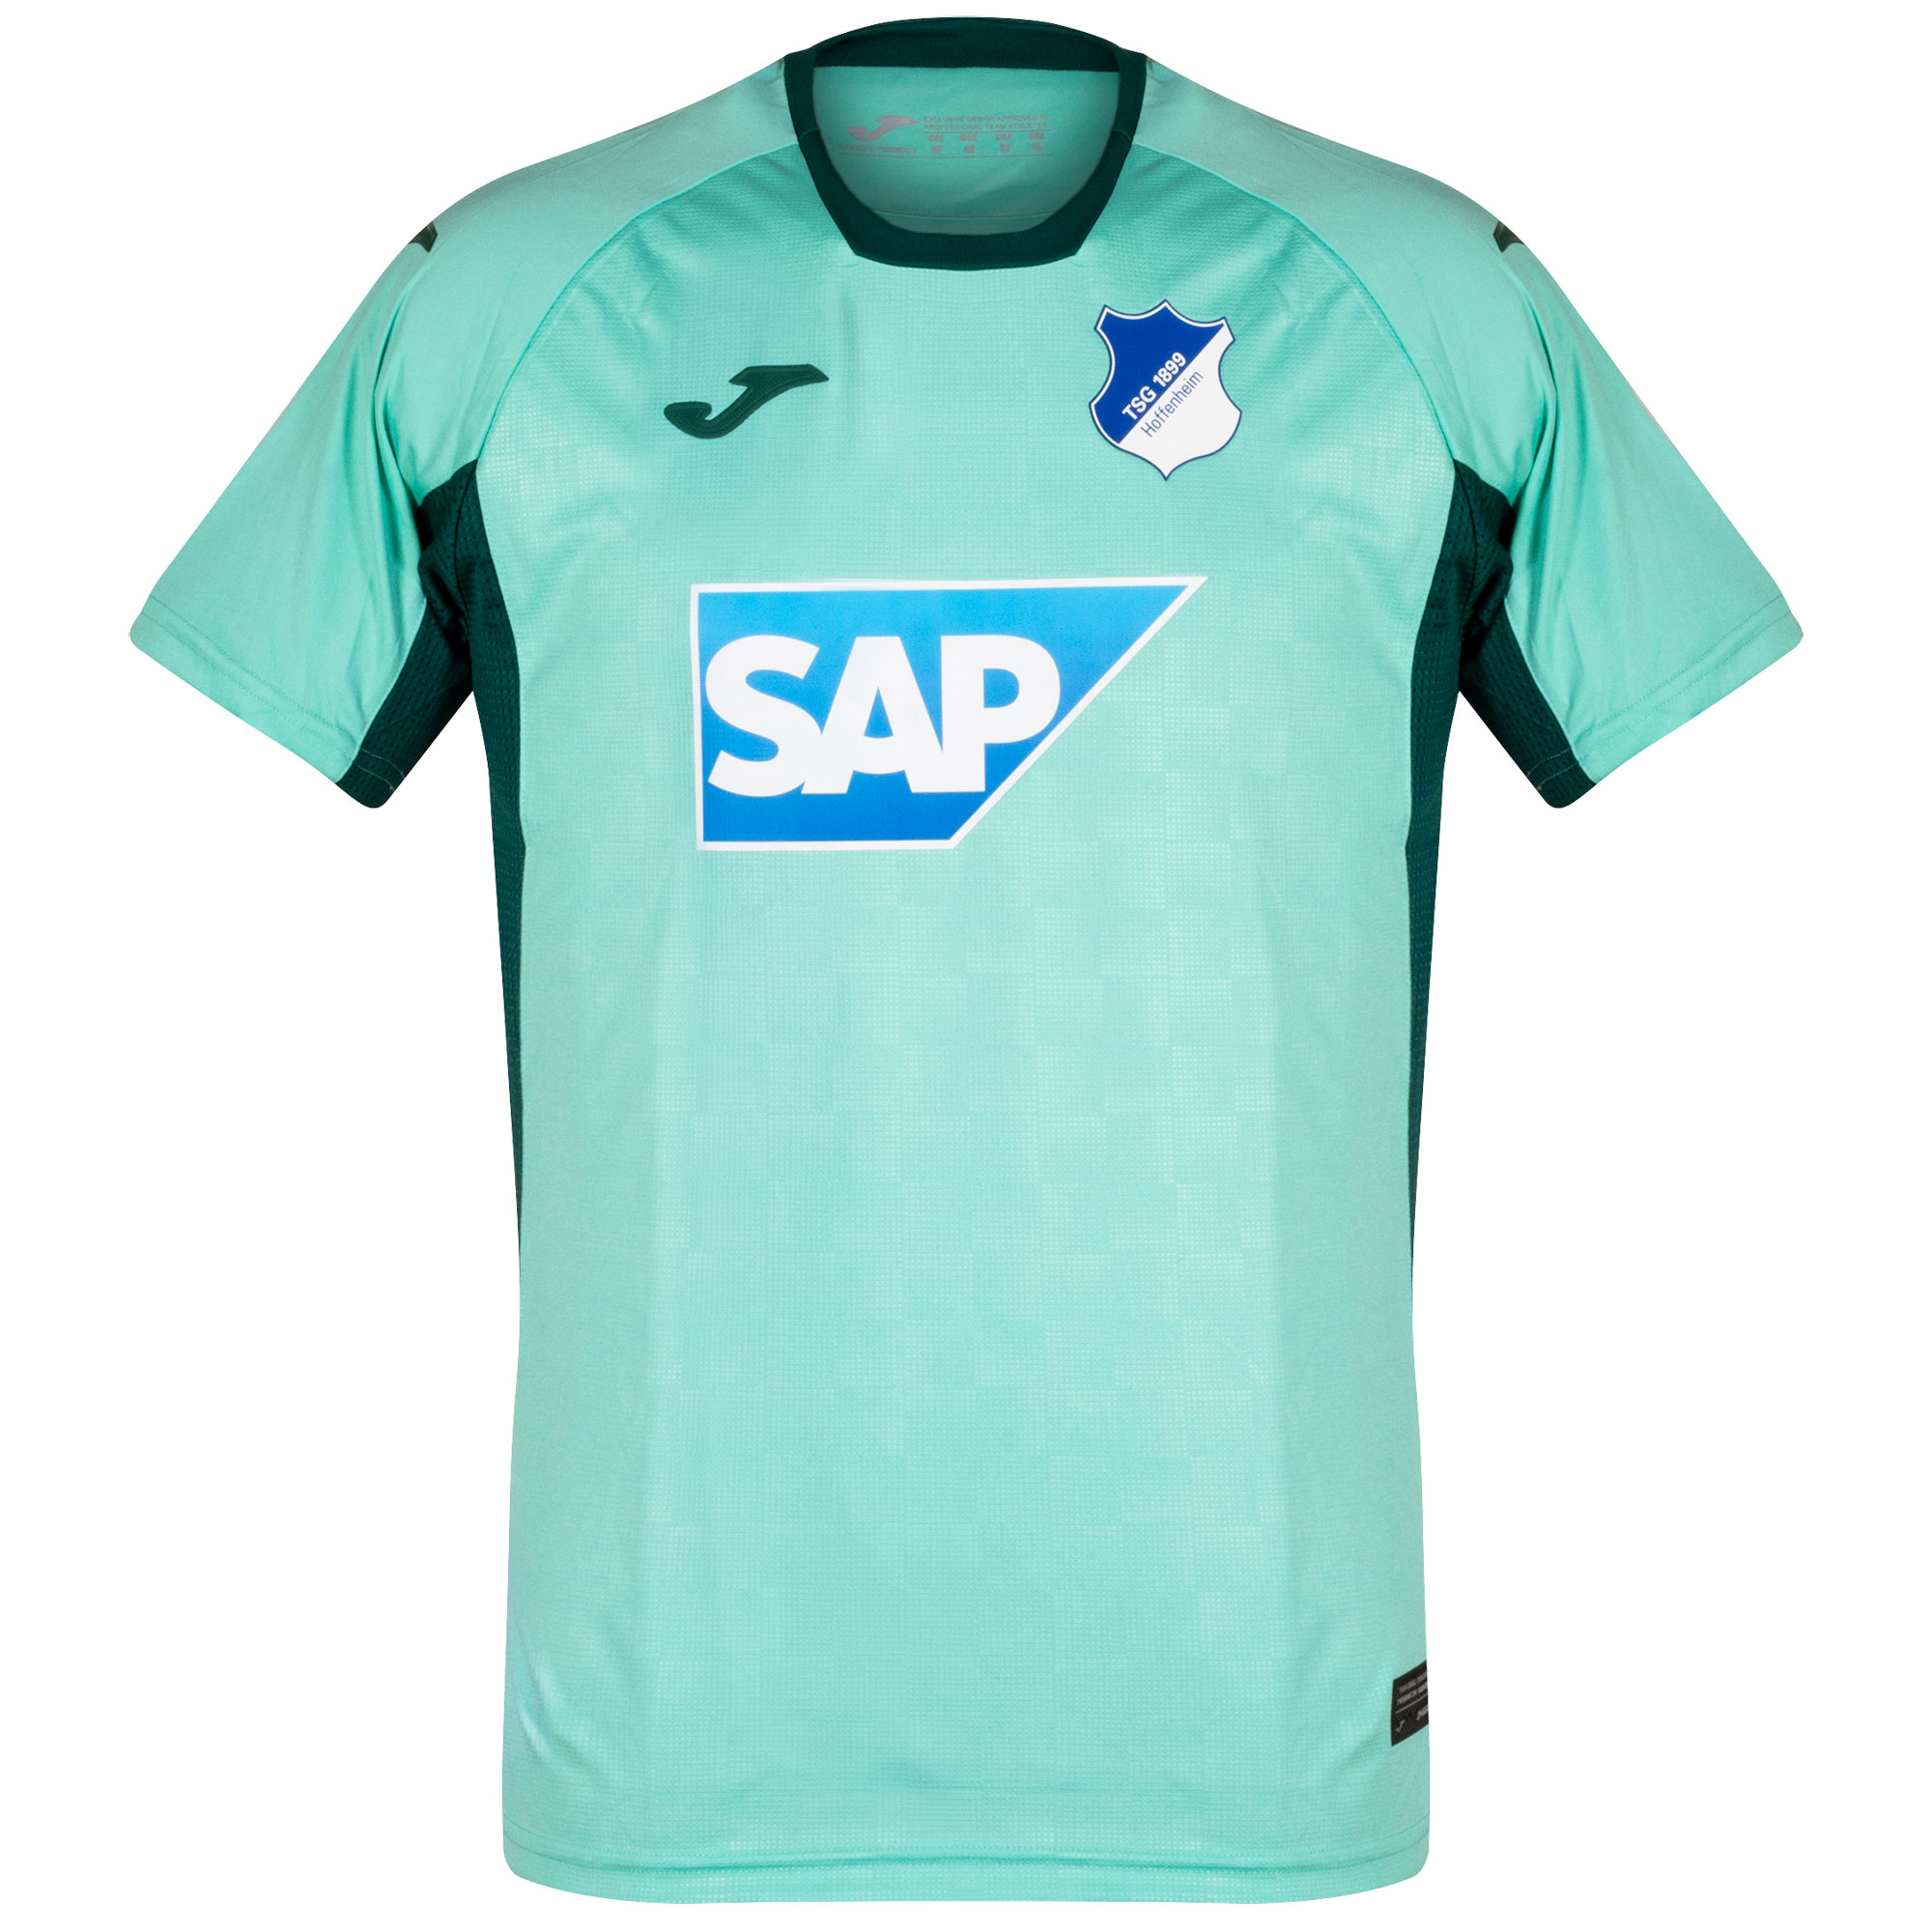 TSG Hoffenheim Shirt Uit 2019-2020 Top Merken Winkel